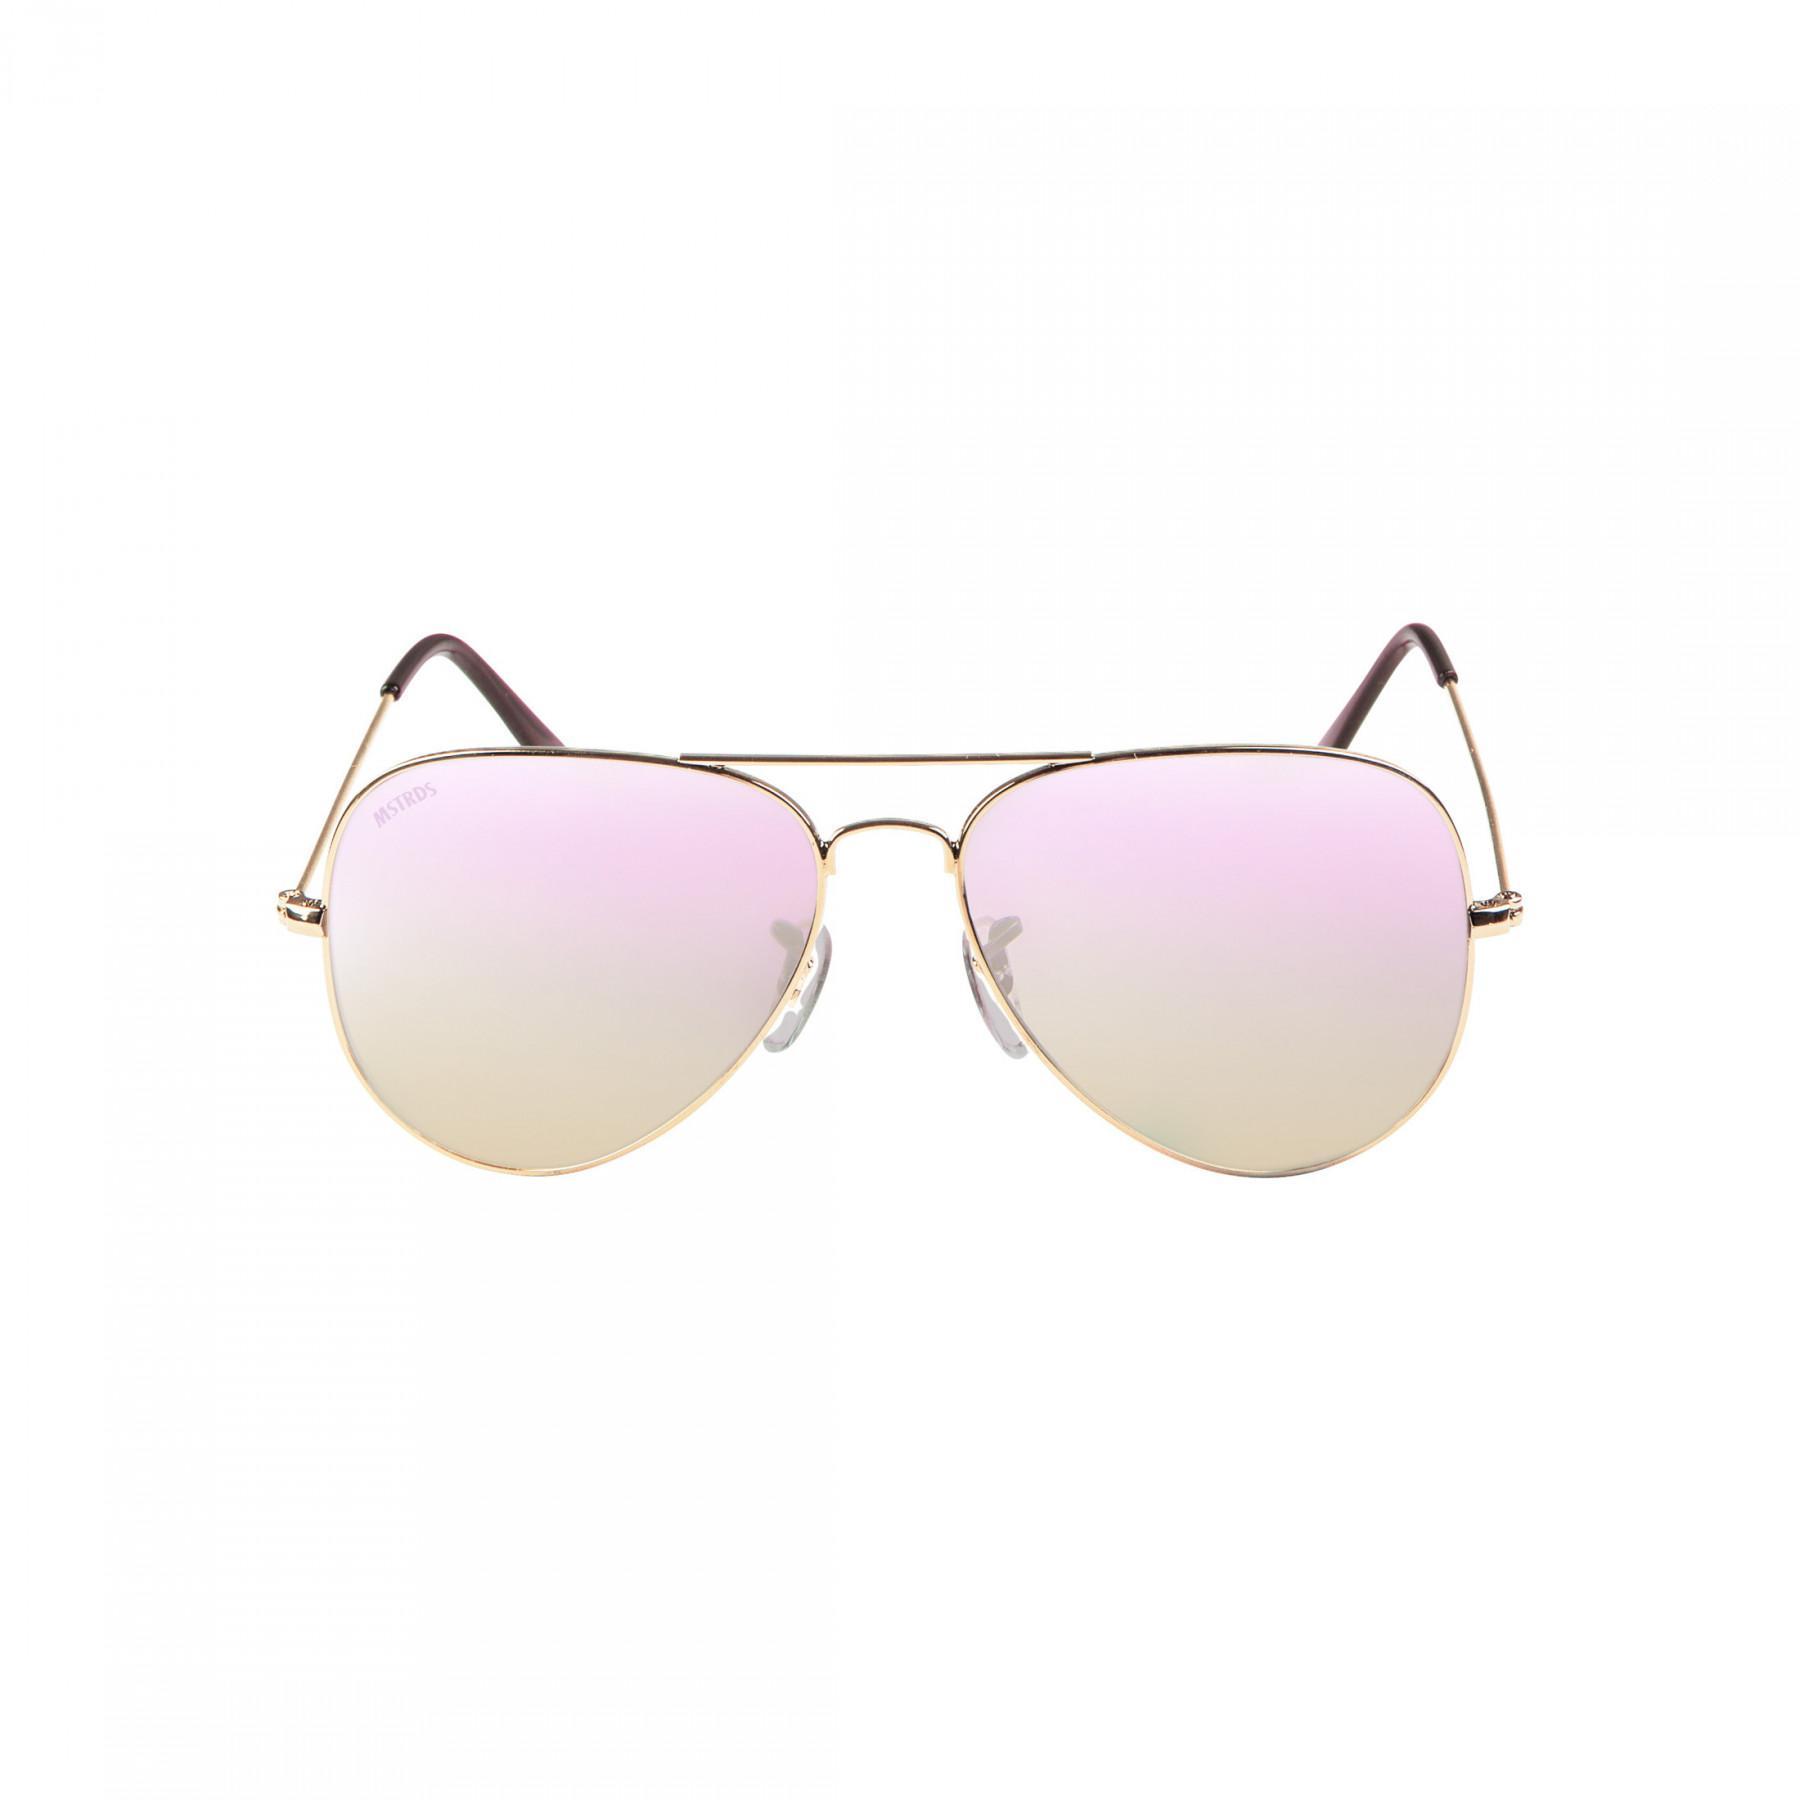 Masterdis - Accessoires pureav - Sonnenbrillen - Mode-Accessoires Sonnenbrille